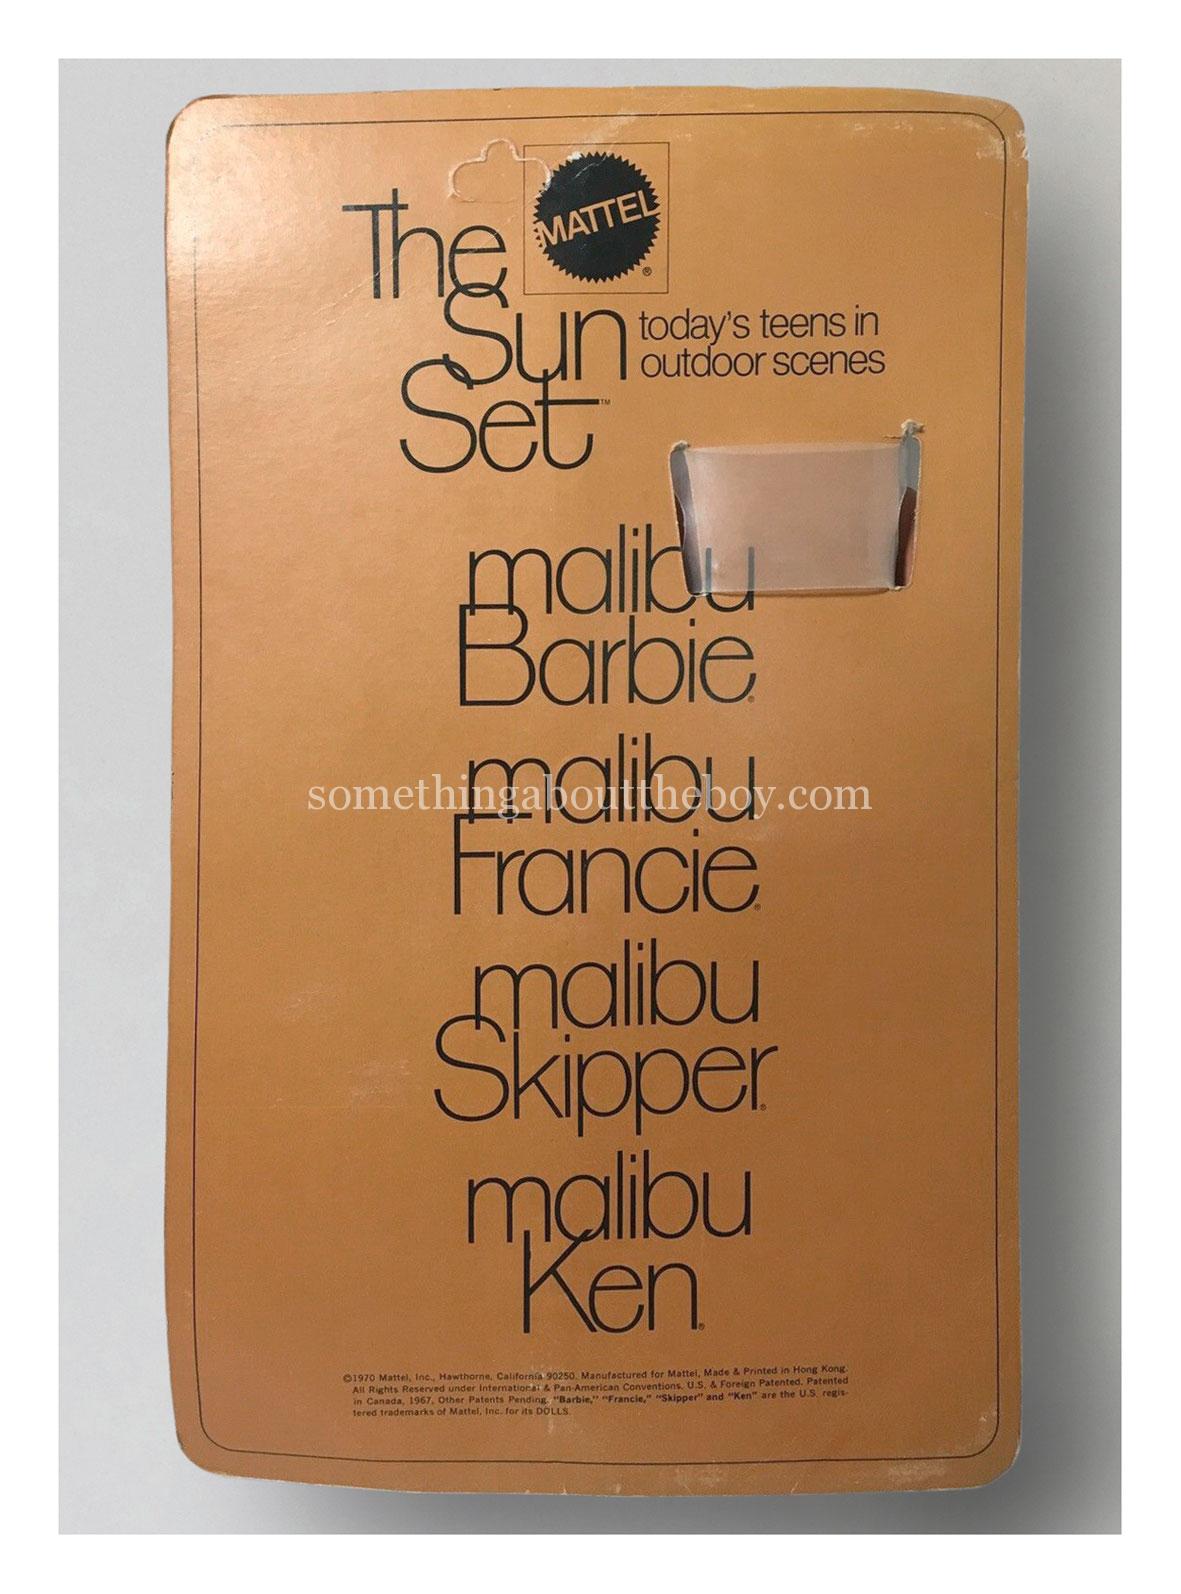 1971 #1088 Sun Set Malibu Ken original packaging